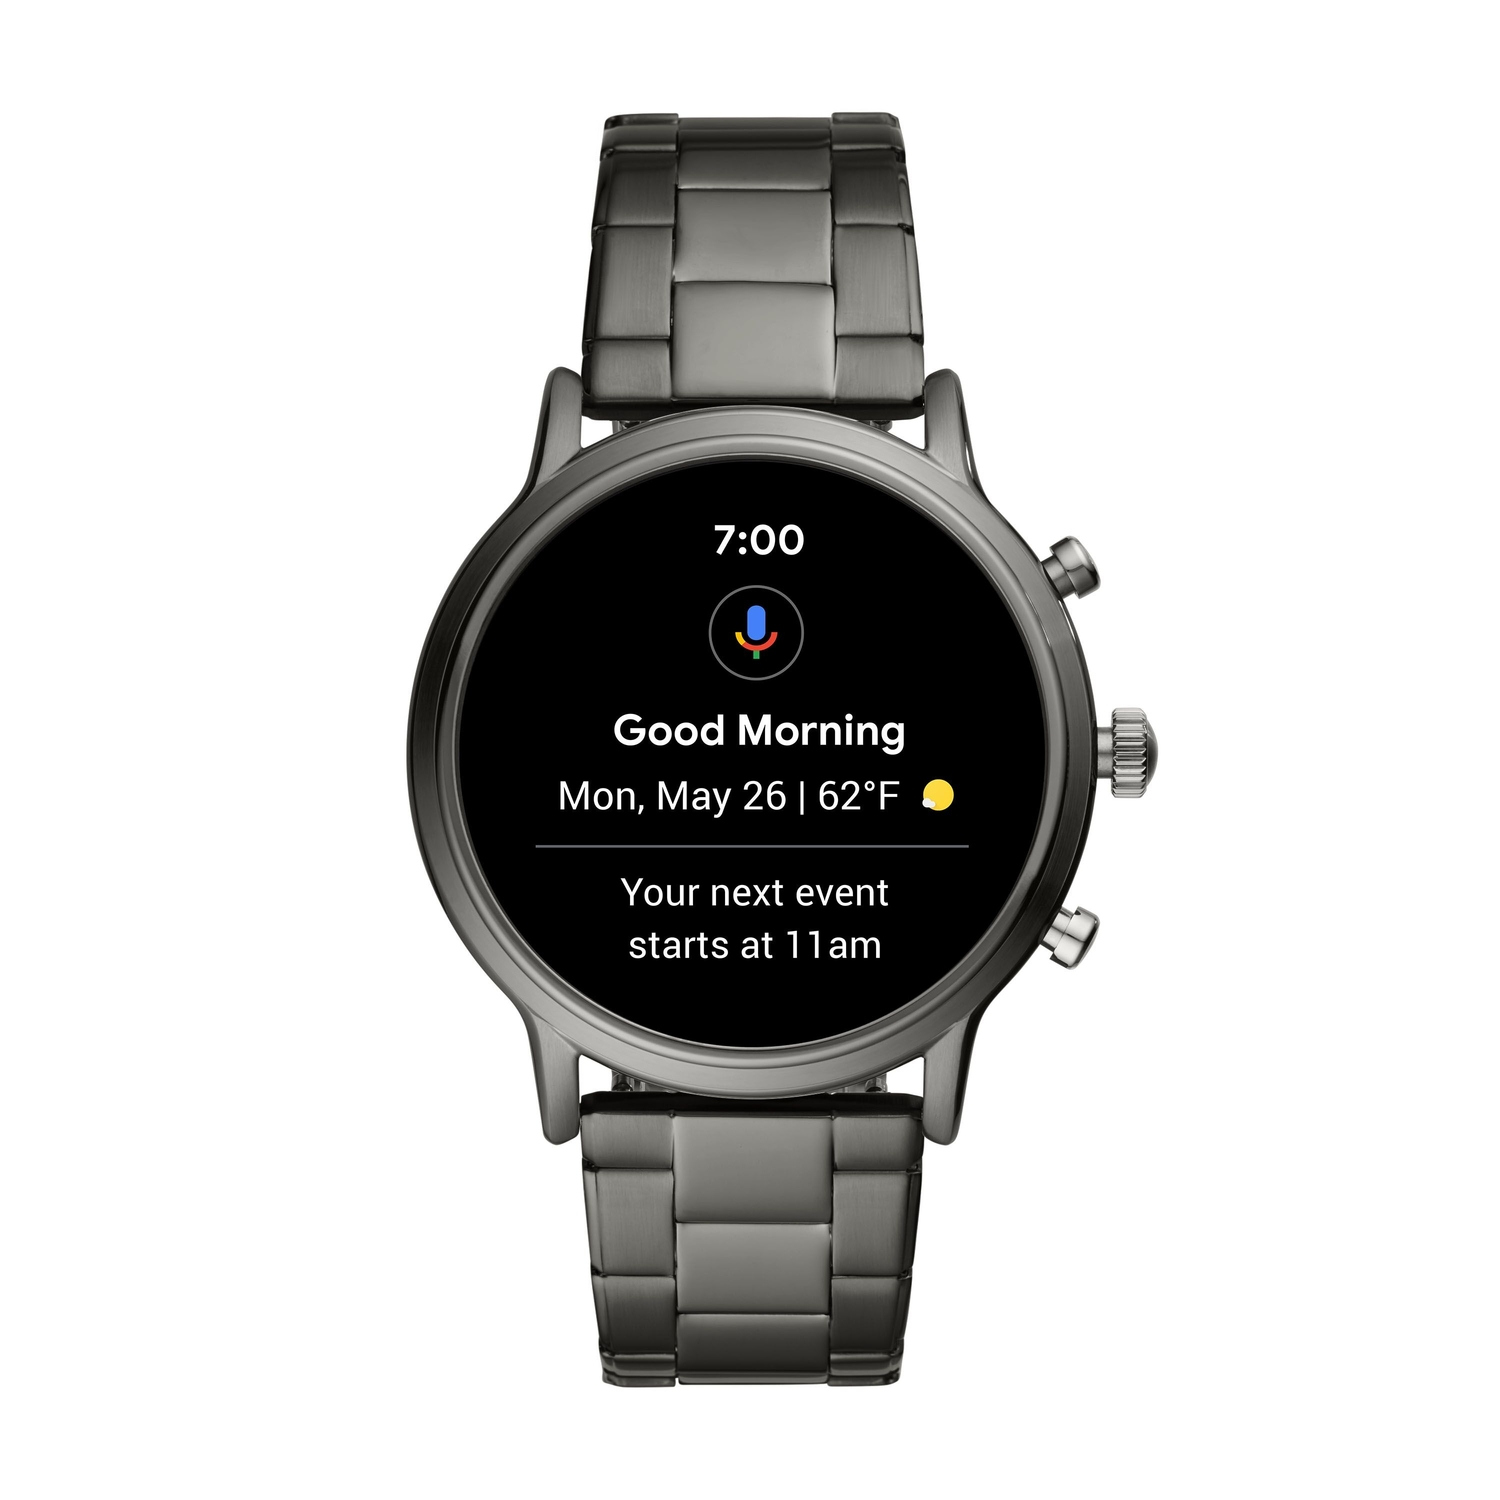 Smartwatch terbaru dari Fossil sebenarnya dapat menerima panggilan suara iPhone